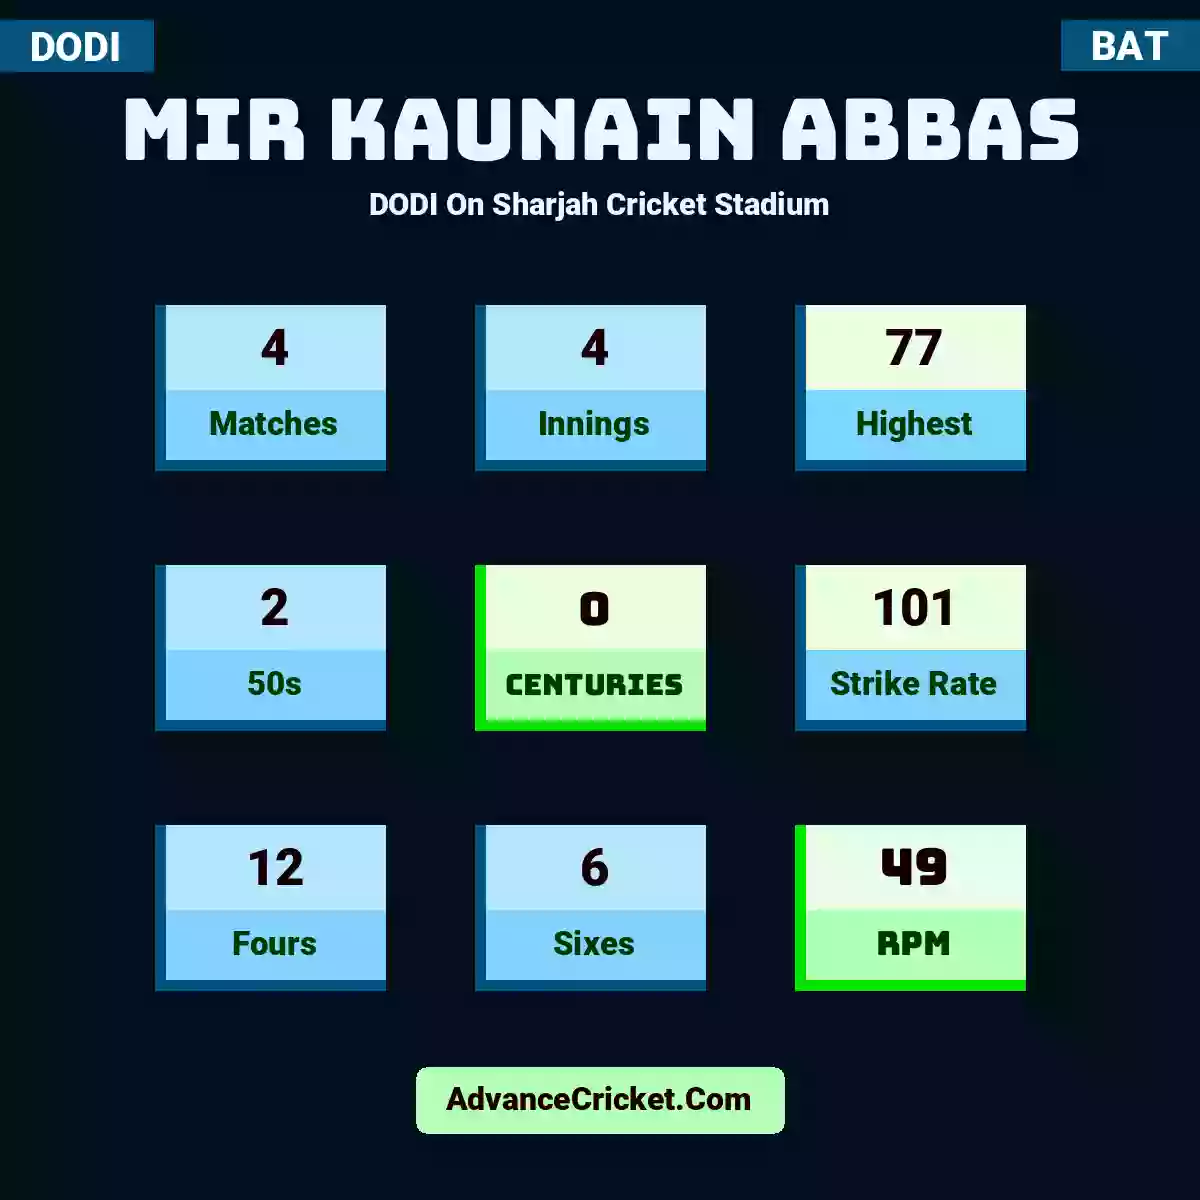 Mir Kaunain Abbas DODI  On Sharjah Cricket Stadium, Mir Kaunain Abbas played 4 matches, scored 77 runs as highest, 2 half-centuries, and 0 centuries, with a strike rate of 101. M.Abbas hit 12 fours and 6 sixes, with an RPM of 49.